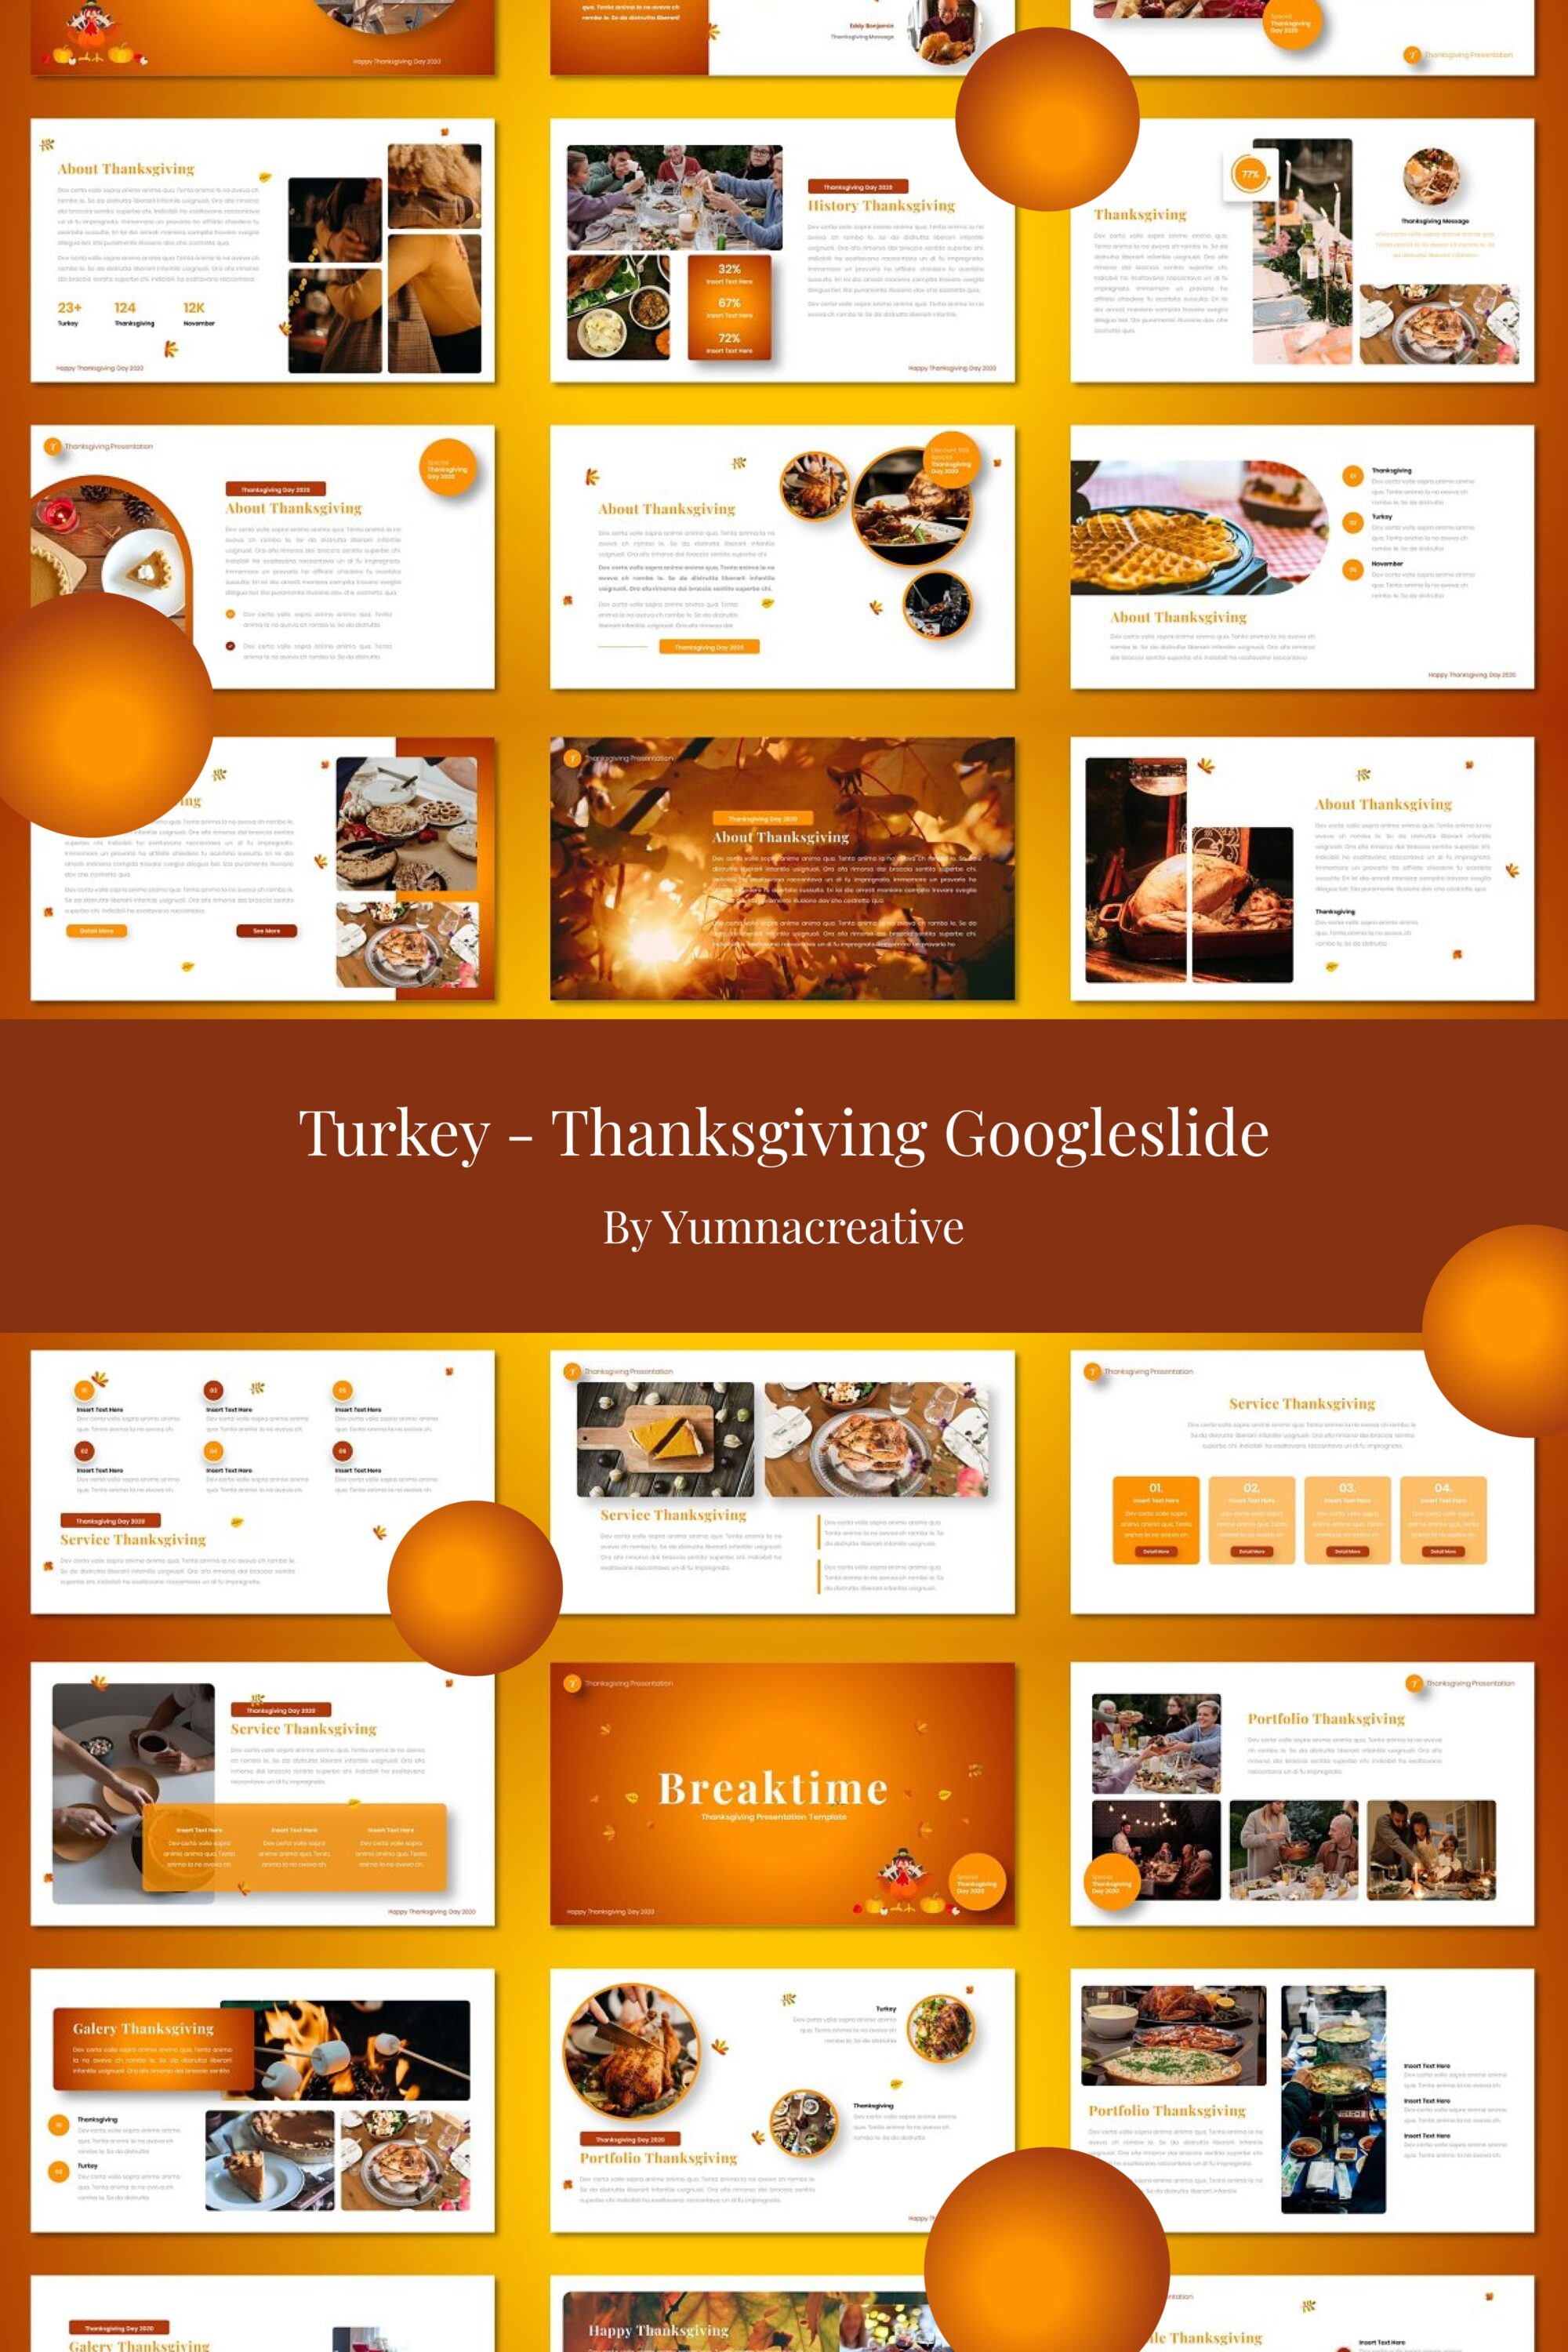 Turkey Thanksgiving Google Slide - pinterest image preview.